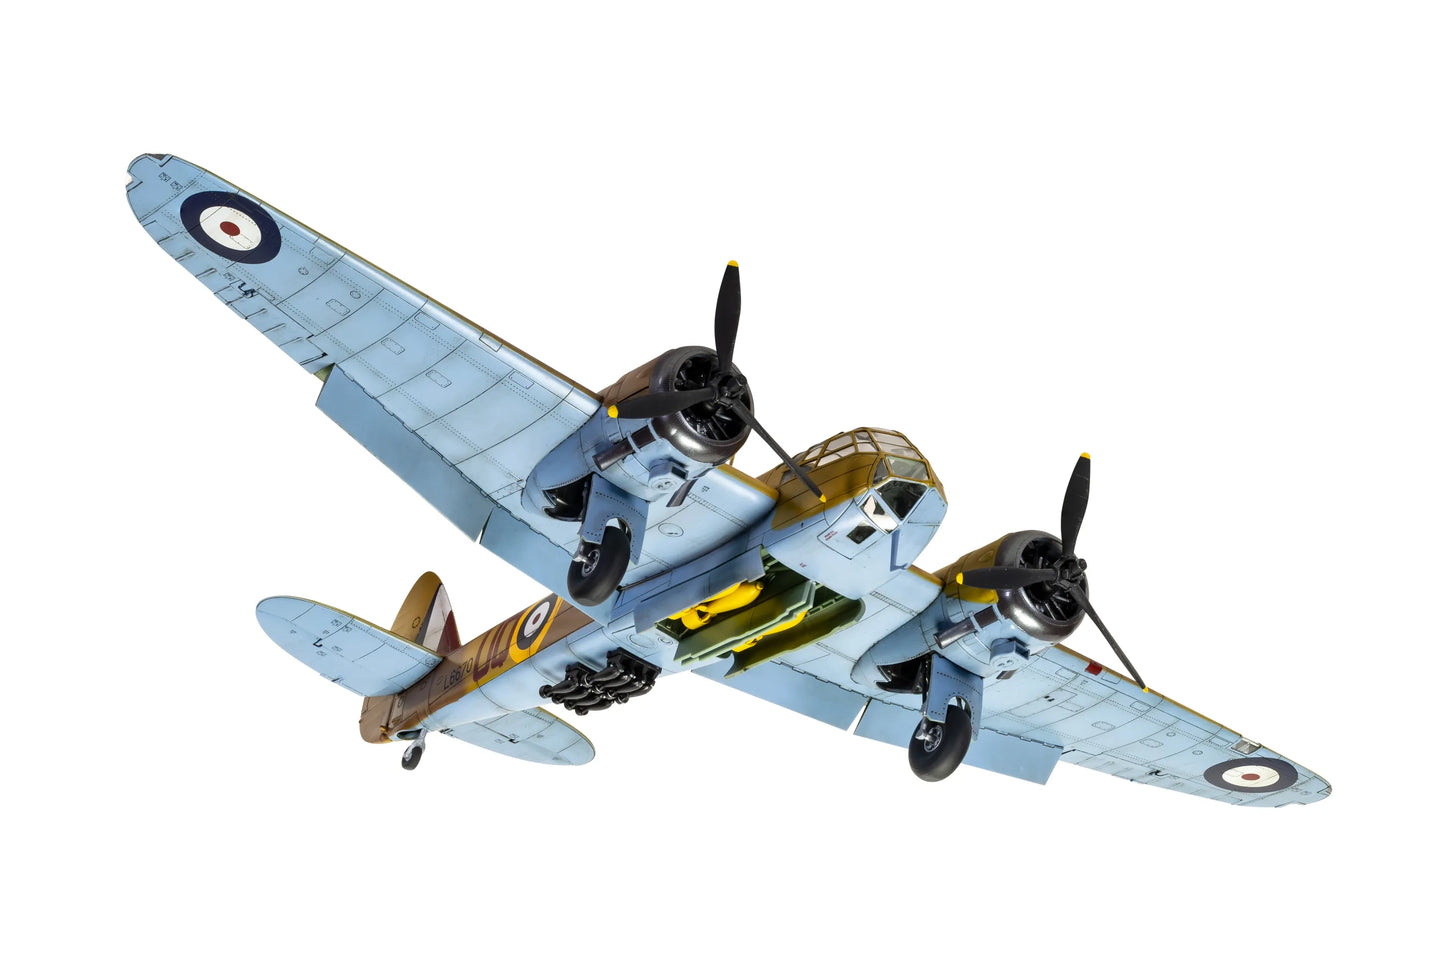 Airfix Bristol Blenheim Mk.1 1:48 (A09190)